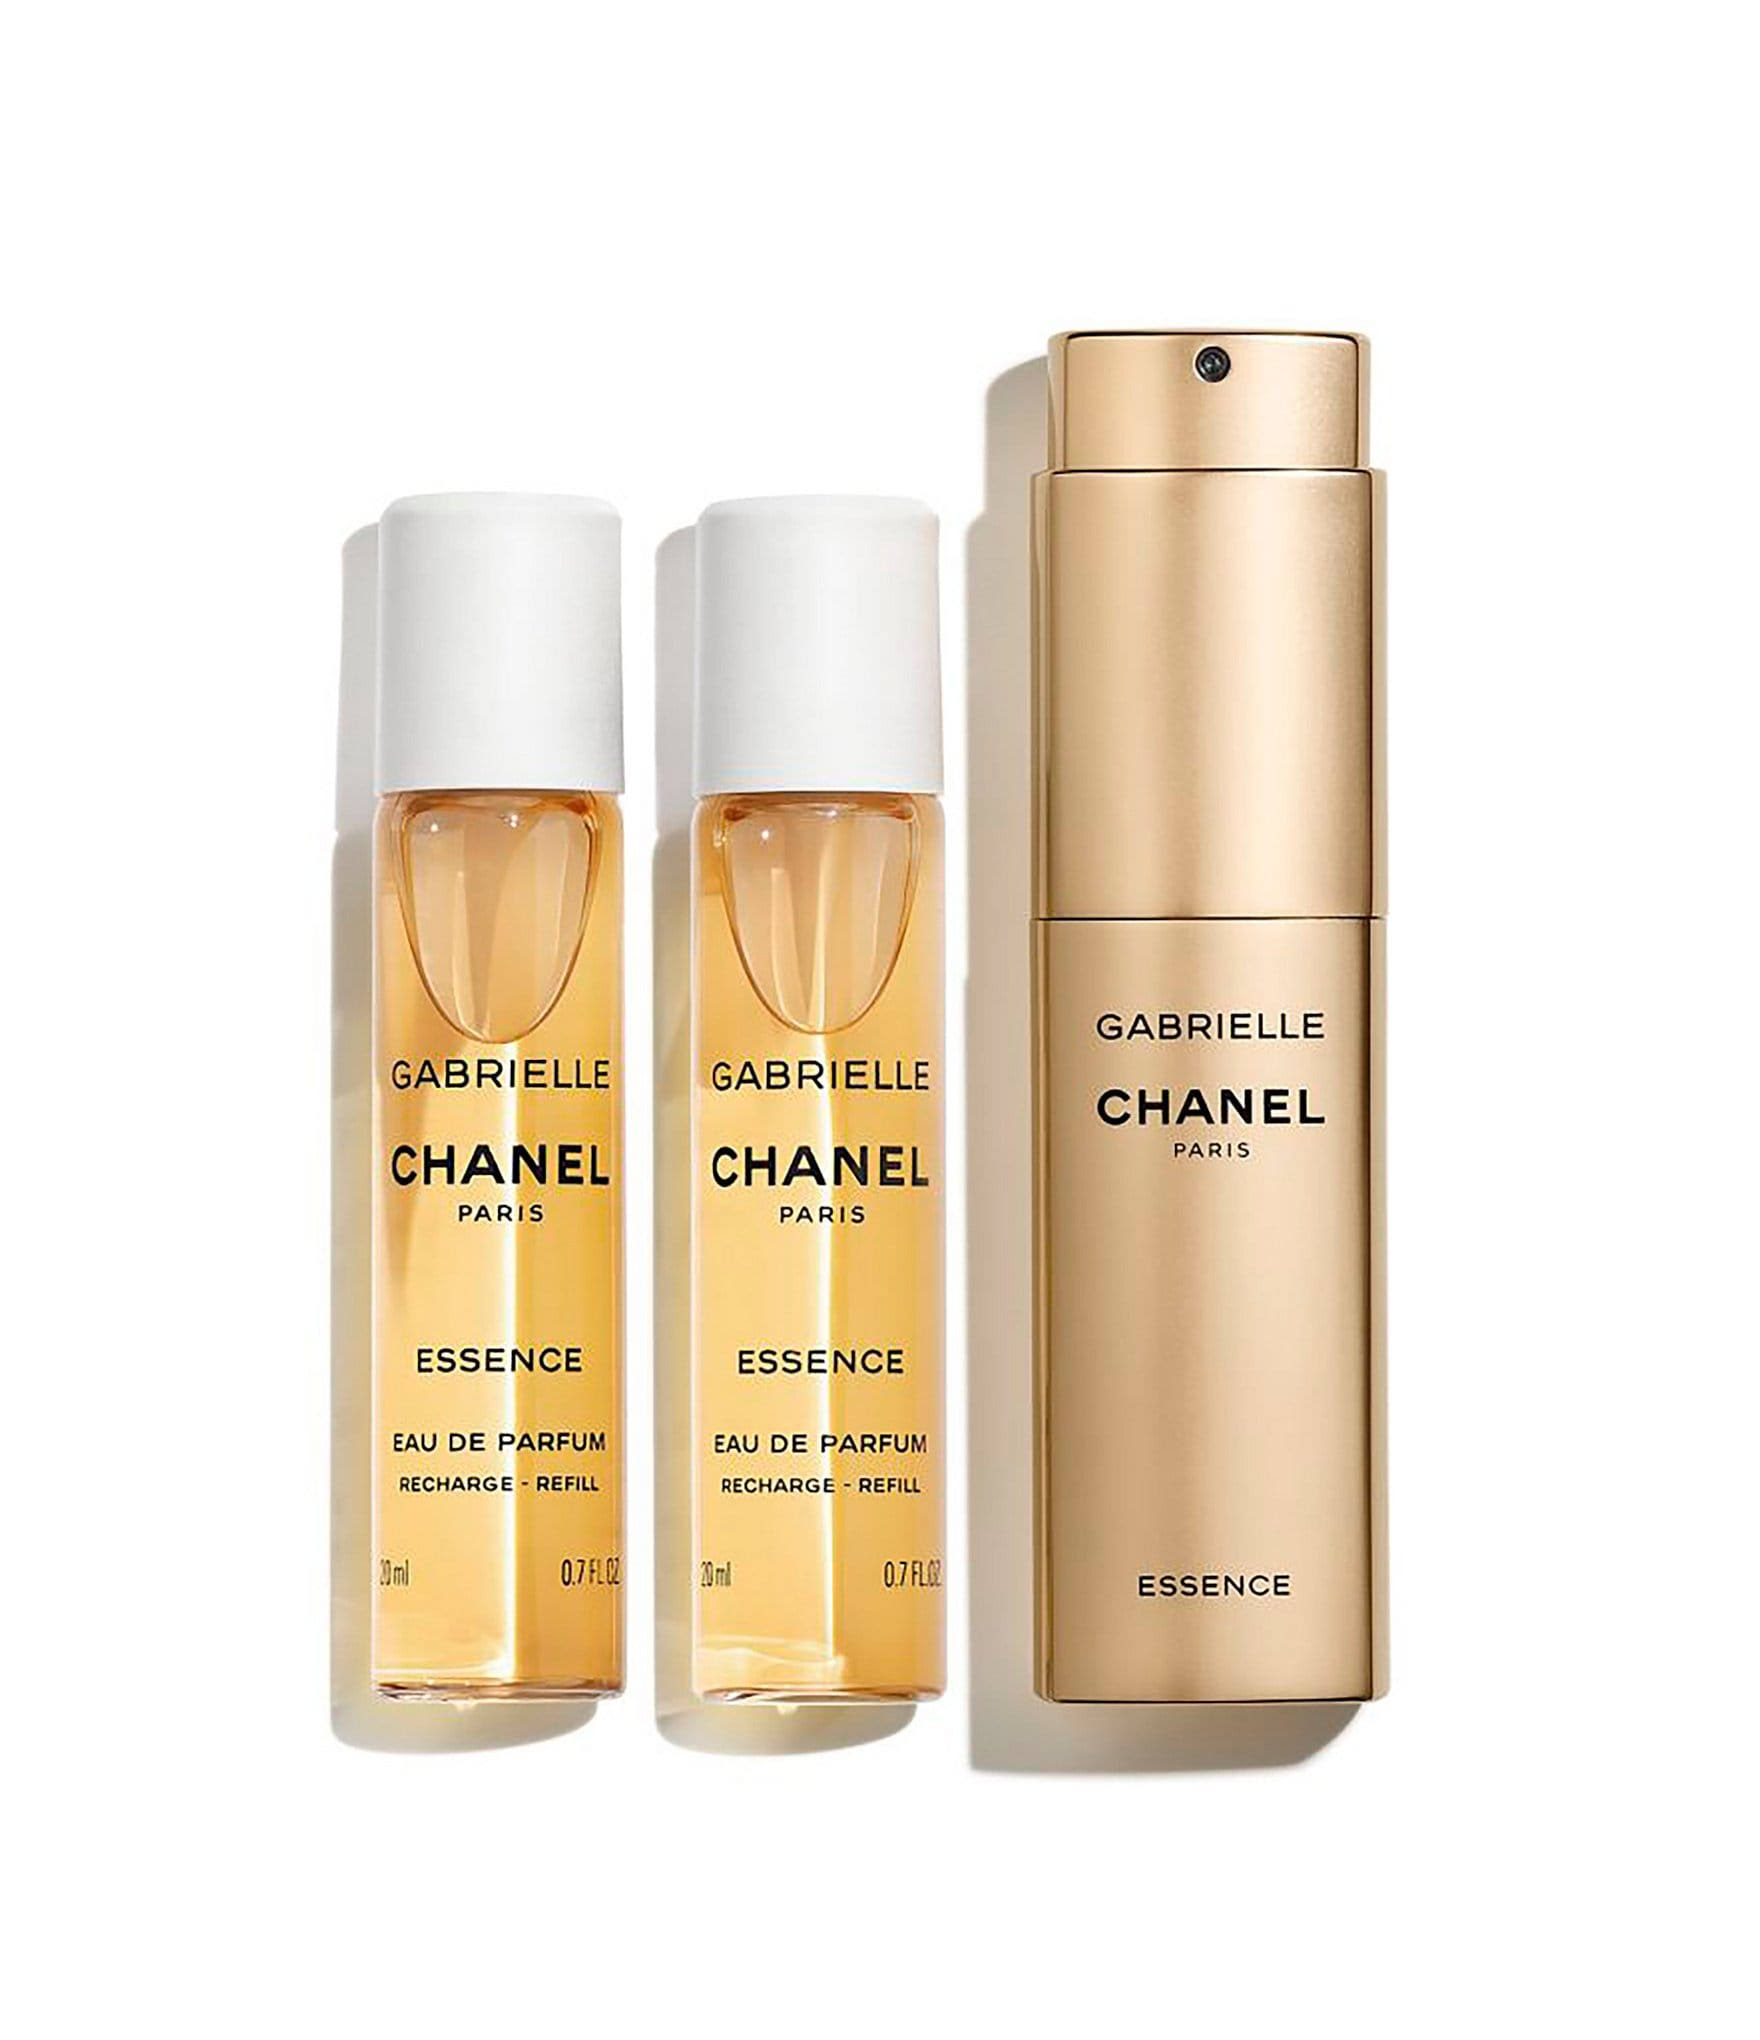 Chanel Gabrielle Essence Eau de Parfum Twist & Spray Set